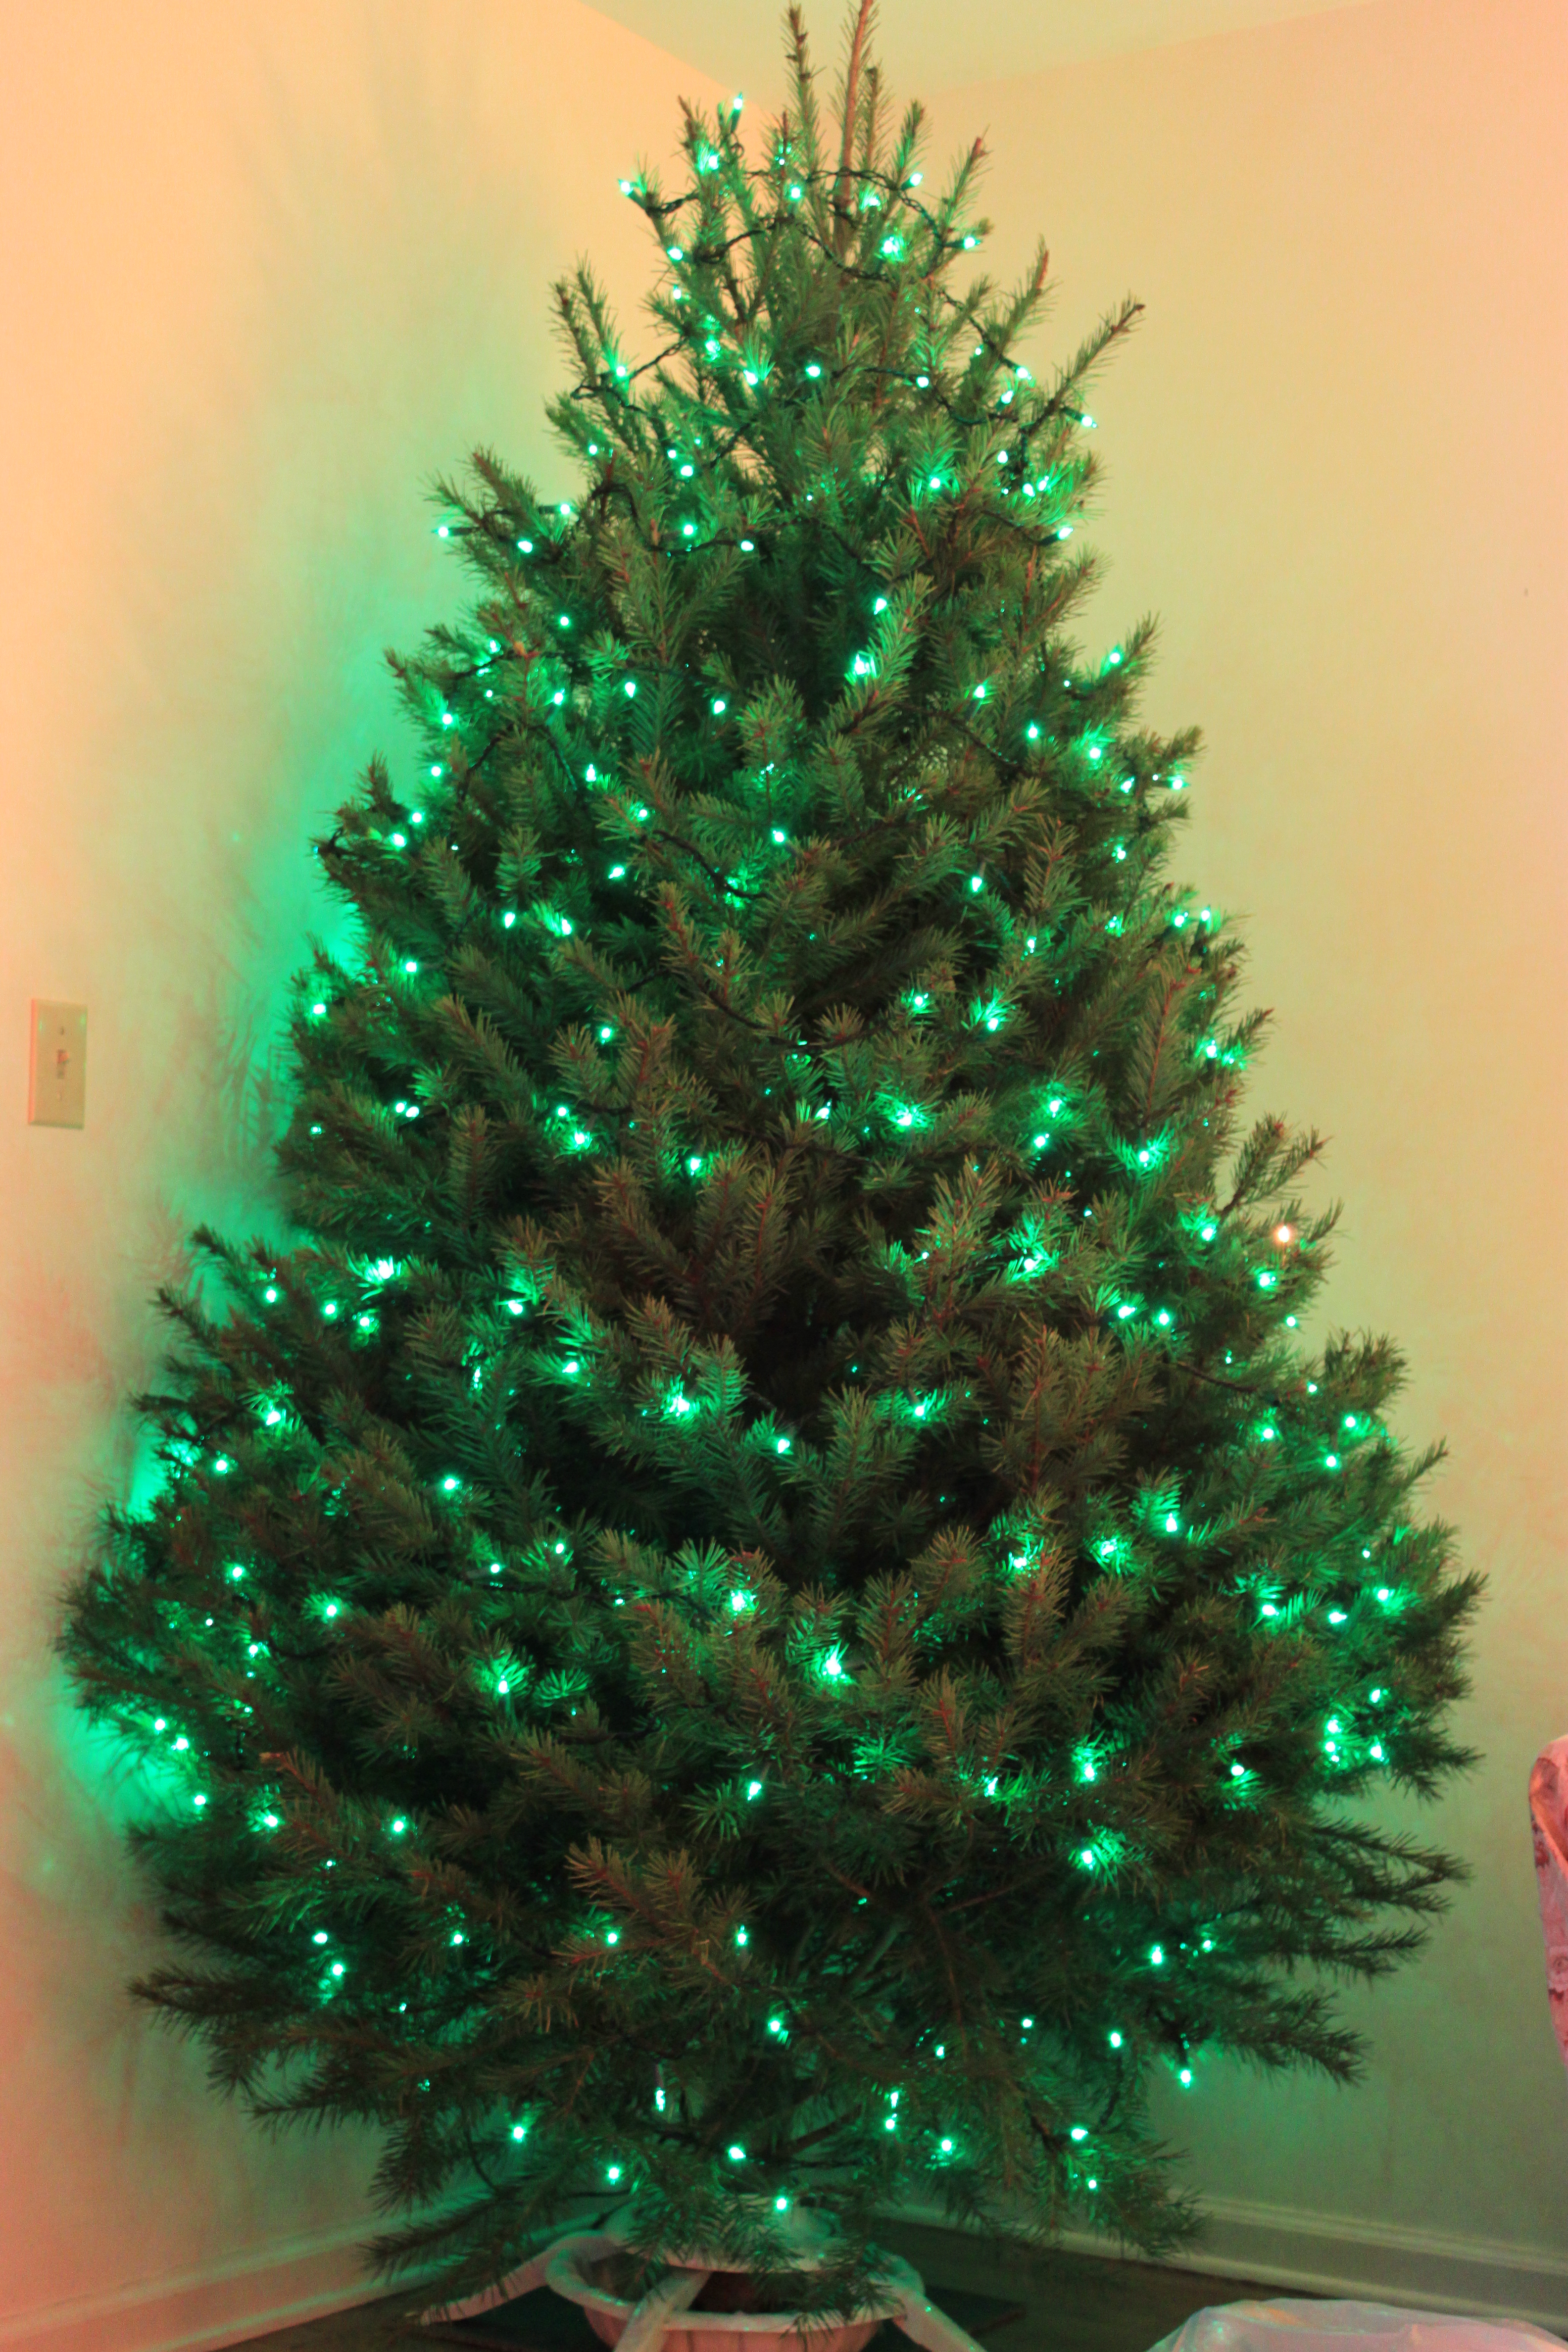 File:Minimalistic green Christmas tree.jpg - Wikimedia Commons